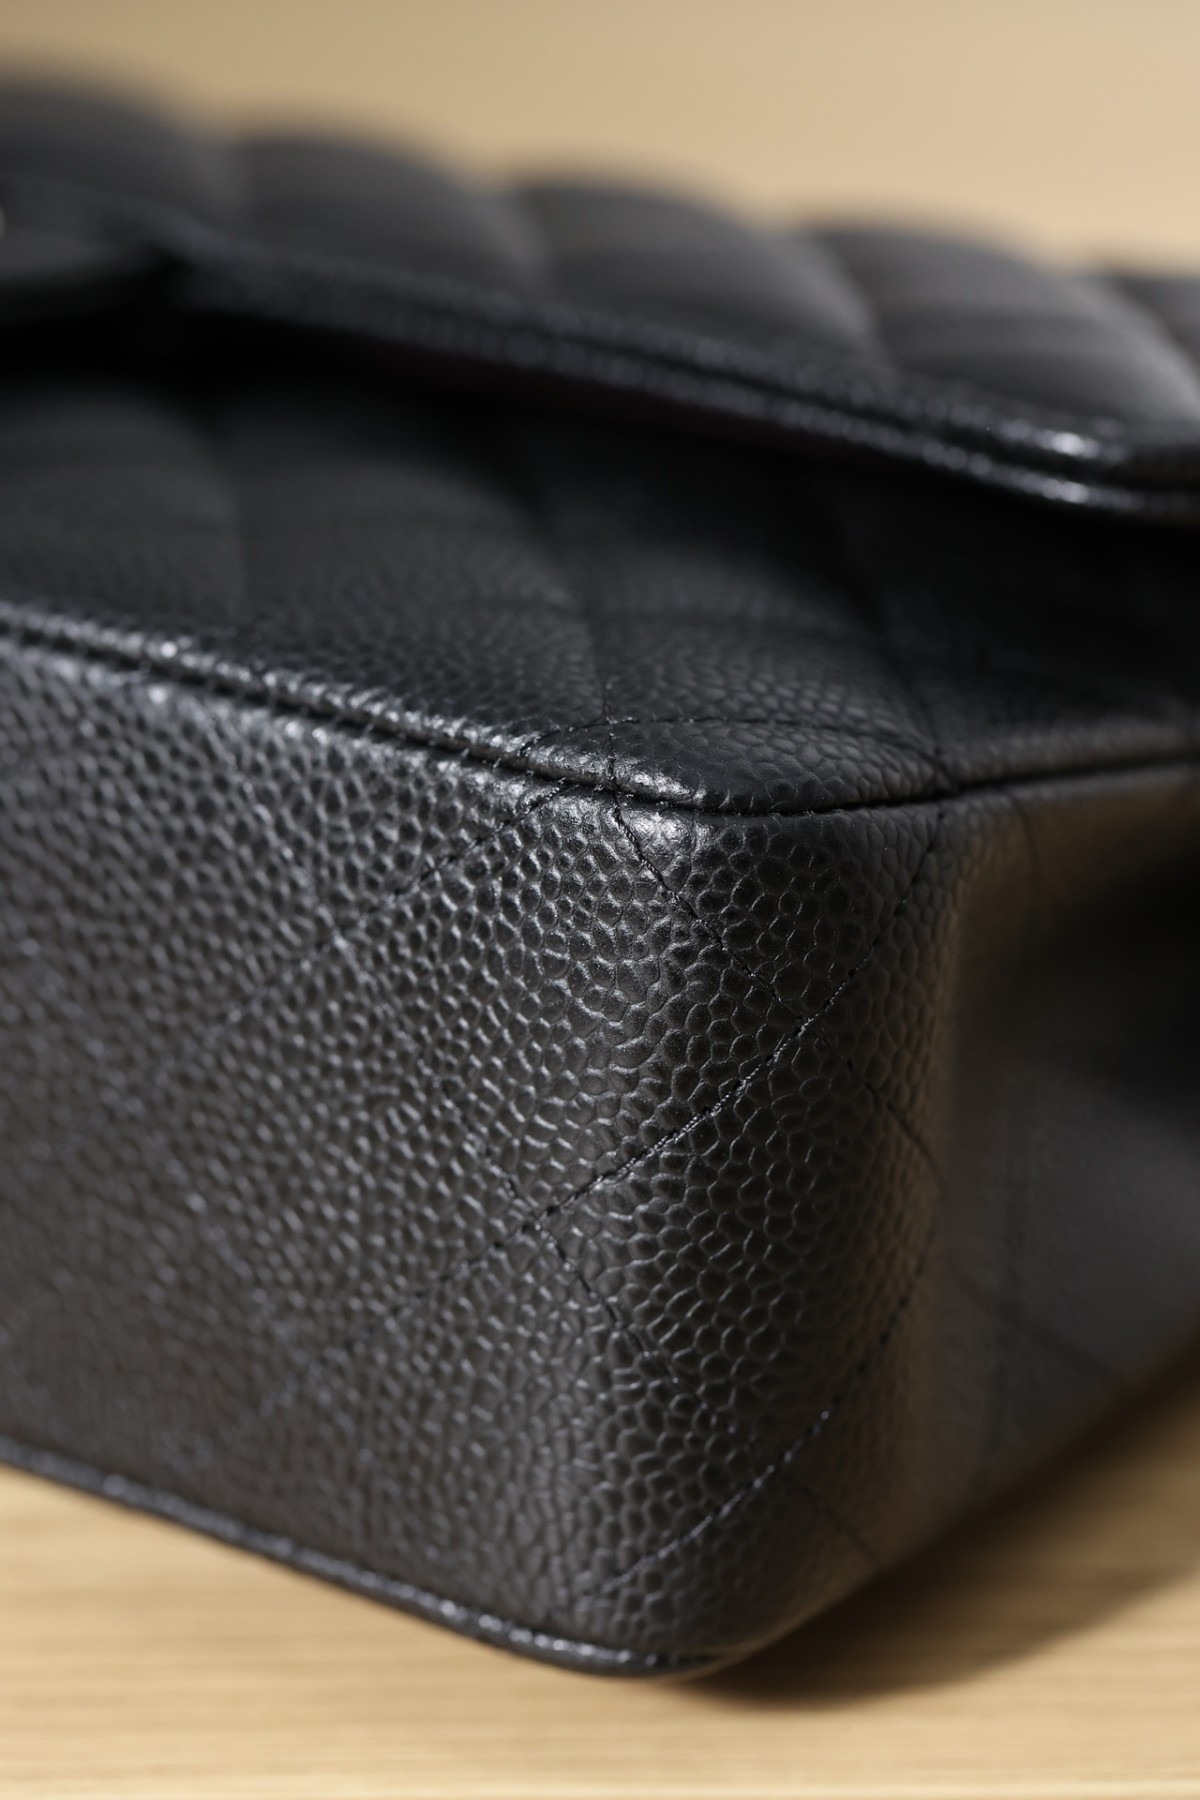 Shebag Chanel CF bags upgraded！France Haas leather arrived！(2024 Week 2)-ਵਧੀਆ ਕੁਆਲਿਟੀ ਨਕਲੀ ਲੁਈਸ ਵਿਟਨ ਬੈਗ ਔਨਲਾਈਨ ਸਟੋਰ, ਰਿਪਲੀਕਾ ਡਿਜ਼ਾਈਨਰ ਬੈਗ ru